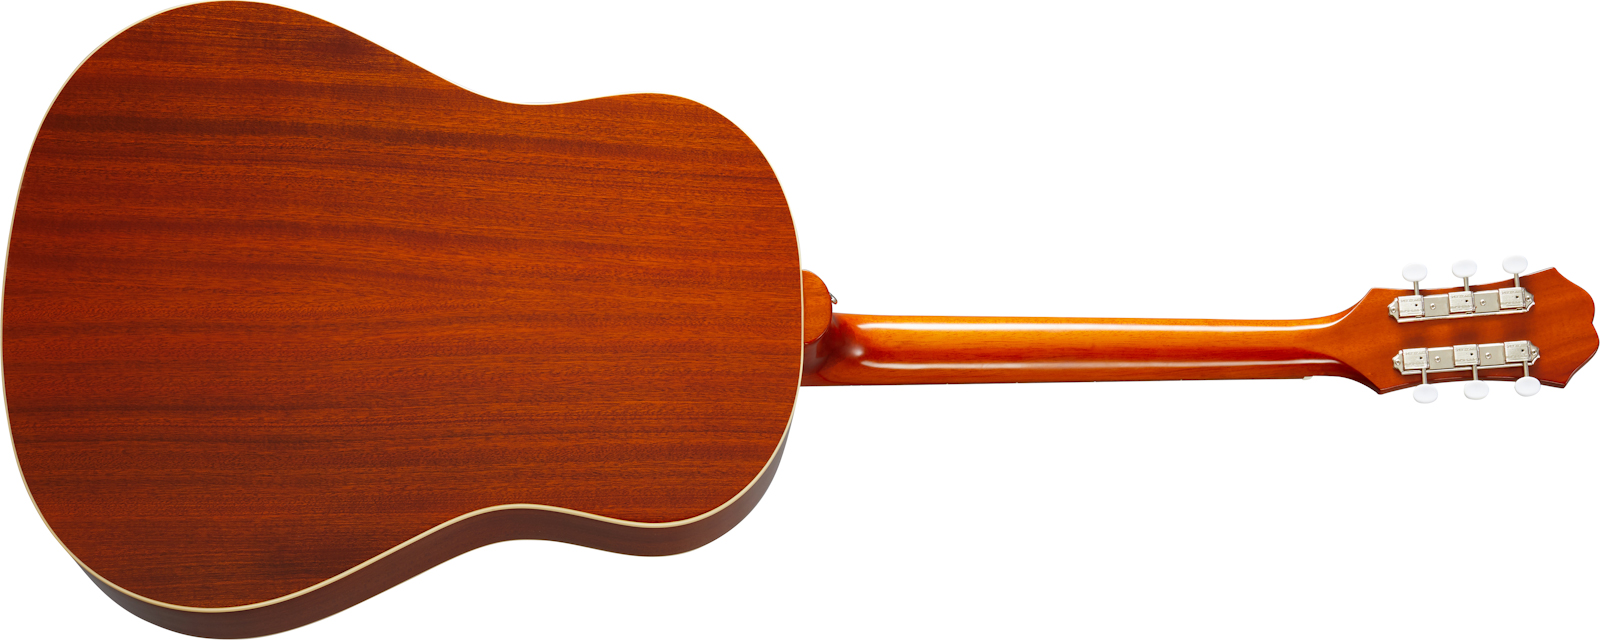 Epiphone Texan Masterbilt Dreadnought Epicea Acajou Lau - Antique Natural Aged - Electro acoustic guitar - Variation 1